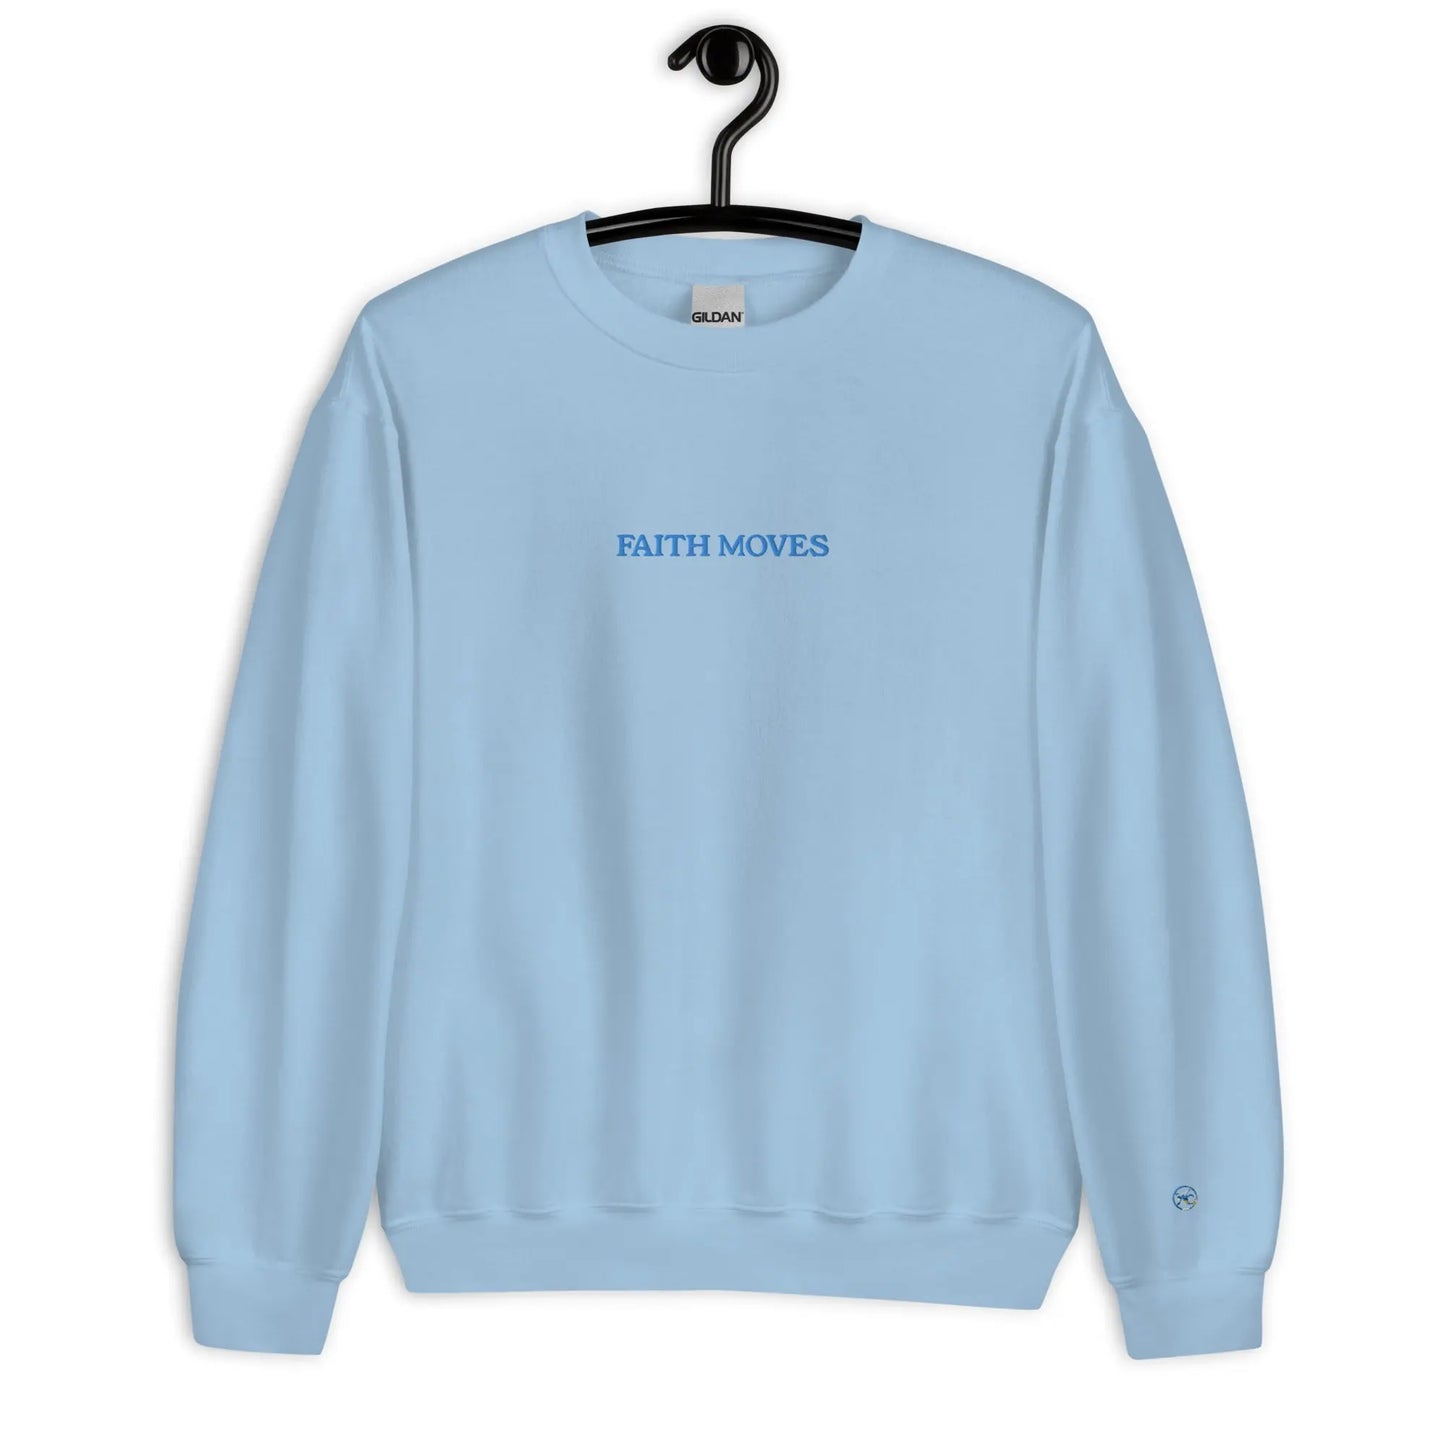 Unisex embroidery  baby blue FAITH MOVES Sweatshirt